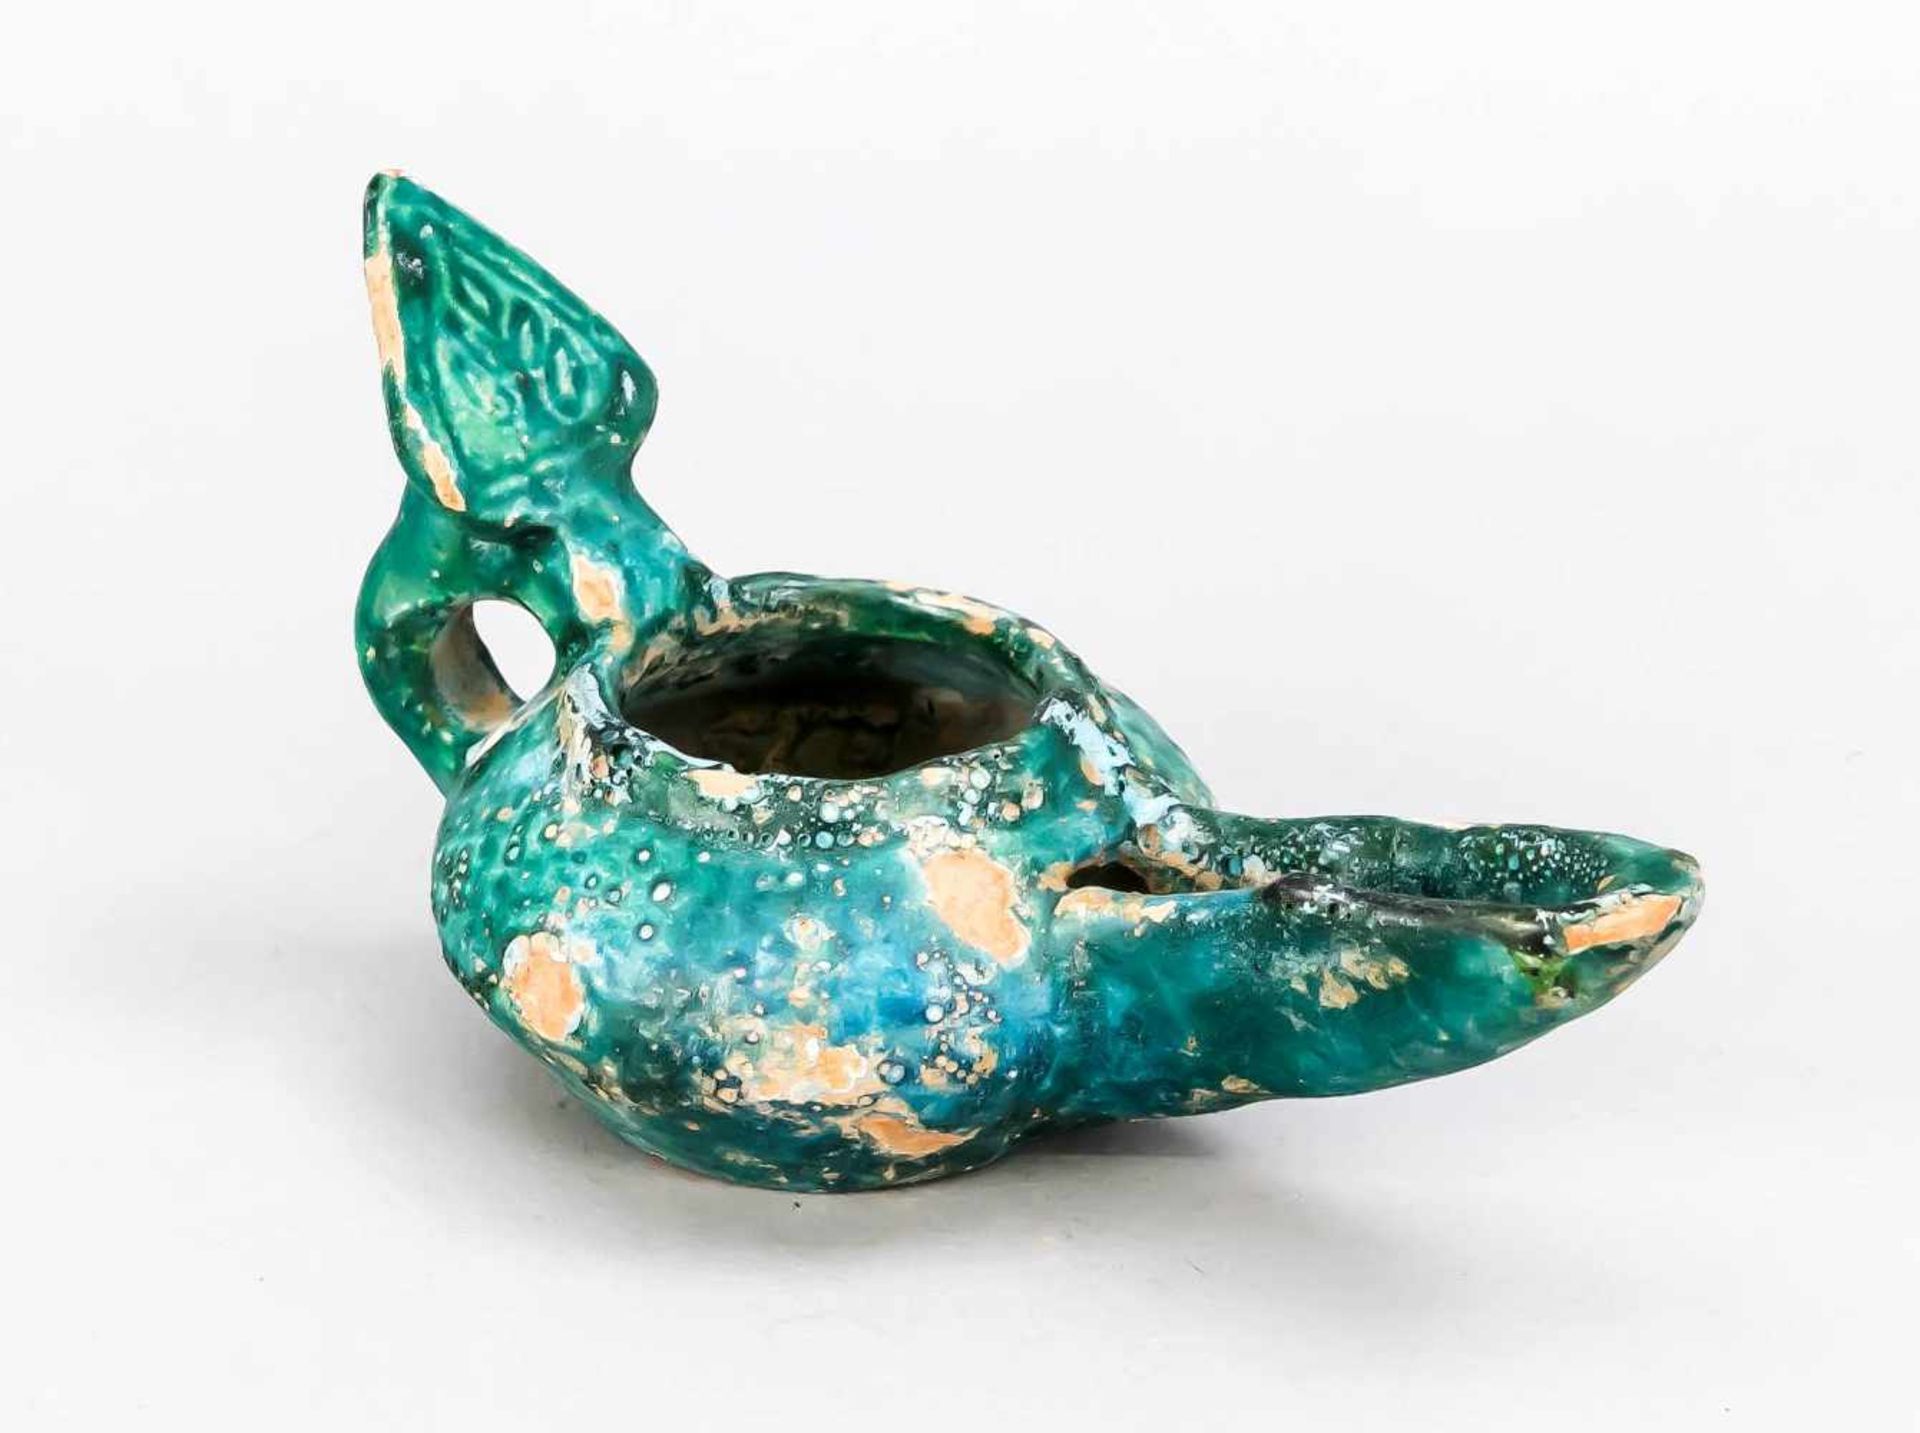 Oil lamp, Nishnapur / Iran, probably 15th century. Ceramic with turquoise glaze, on the